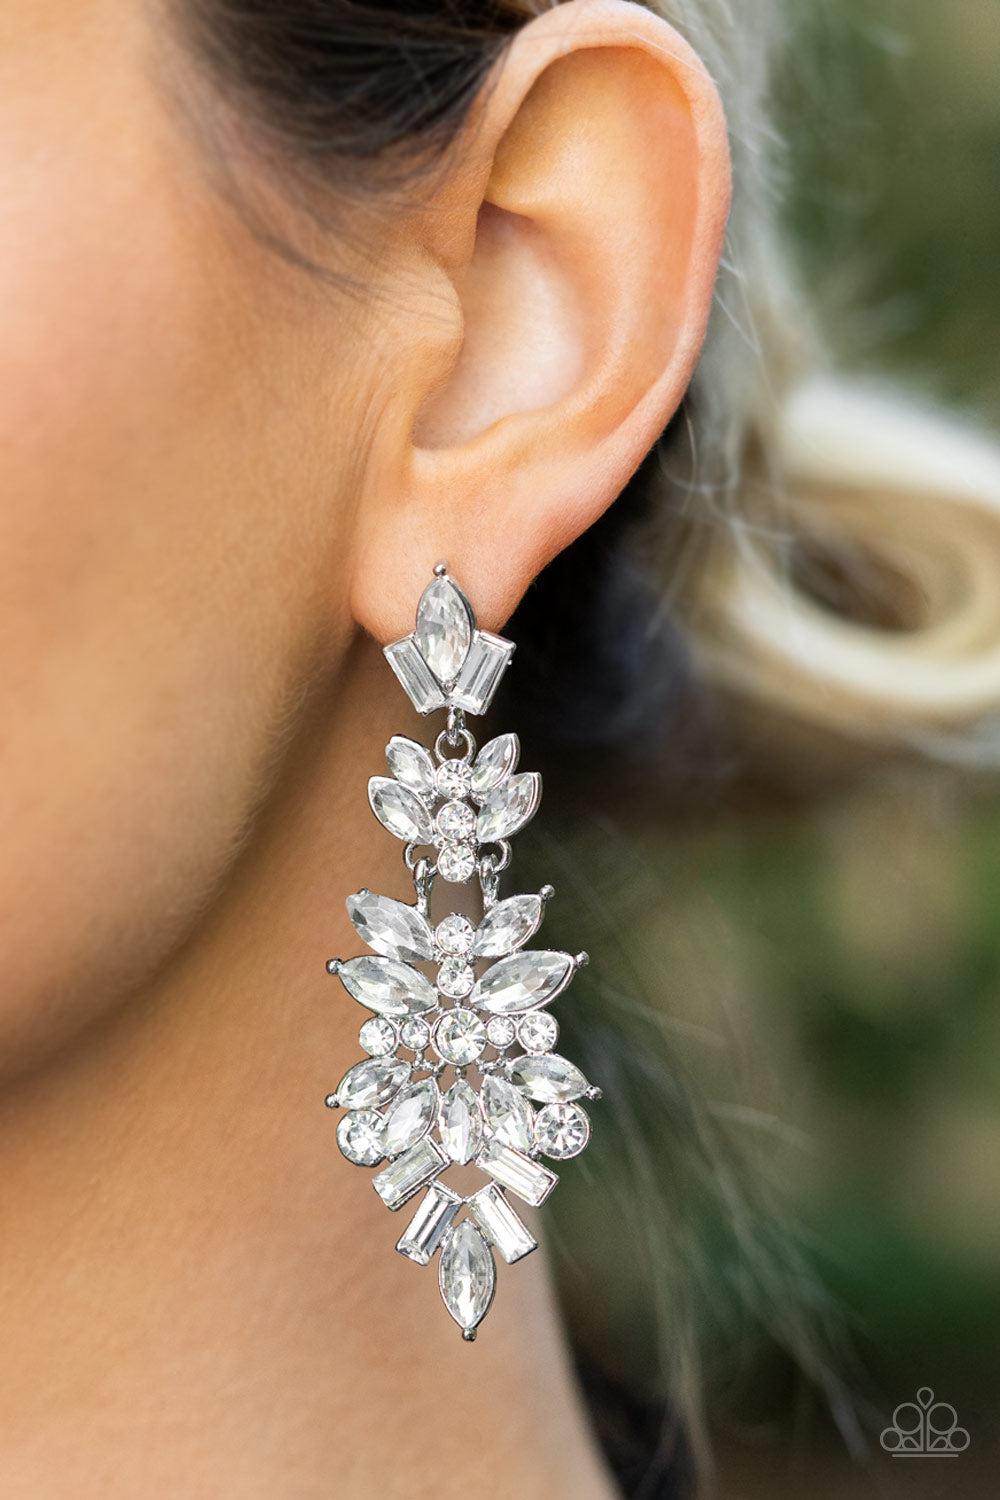 Frozen Fairytale White Rhinestone Earrings - Paparazzi Accessories-on model - CarasShop.com - $5 Jewelry by Cara Jewels